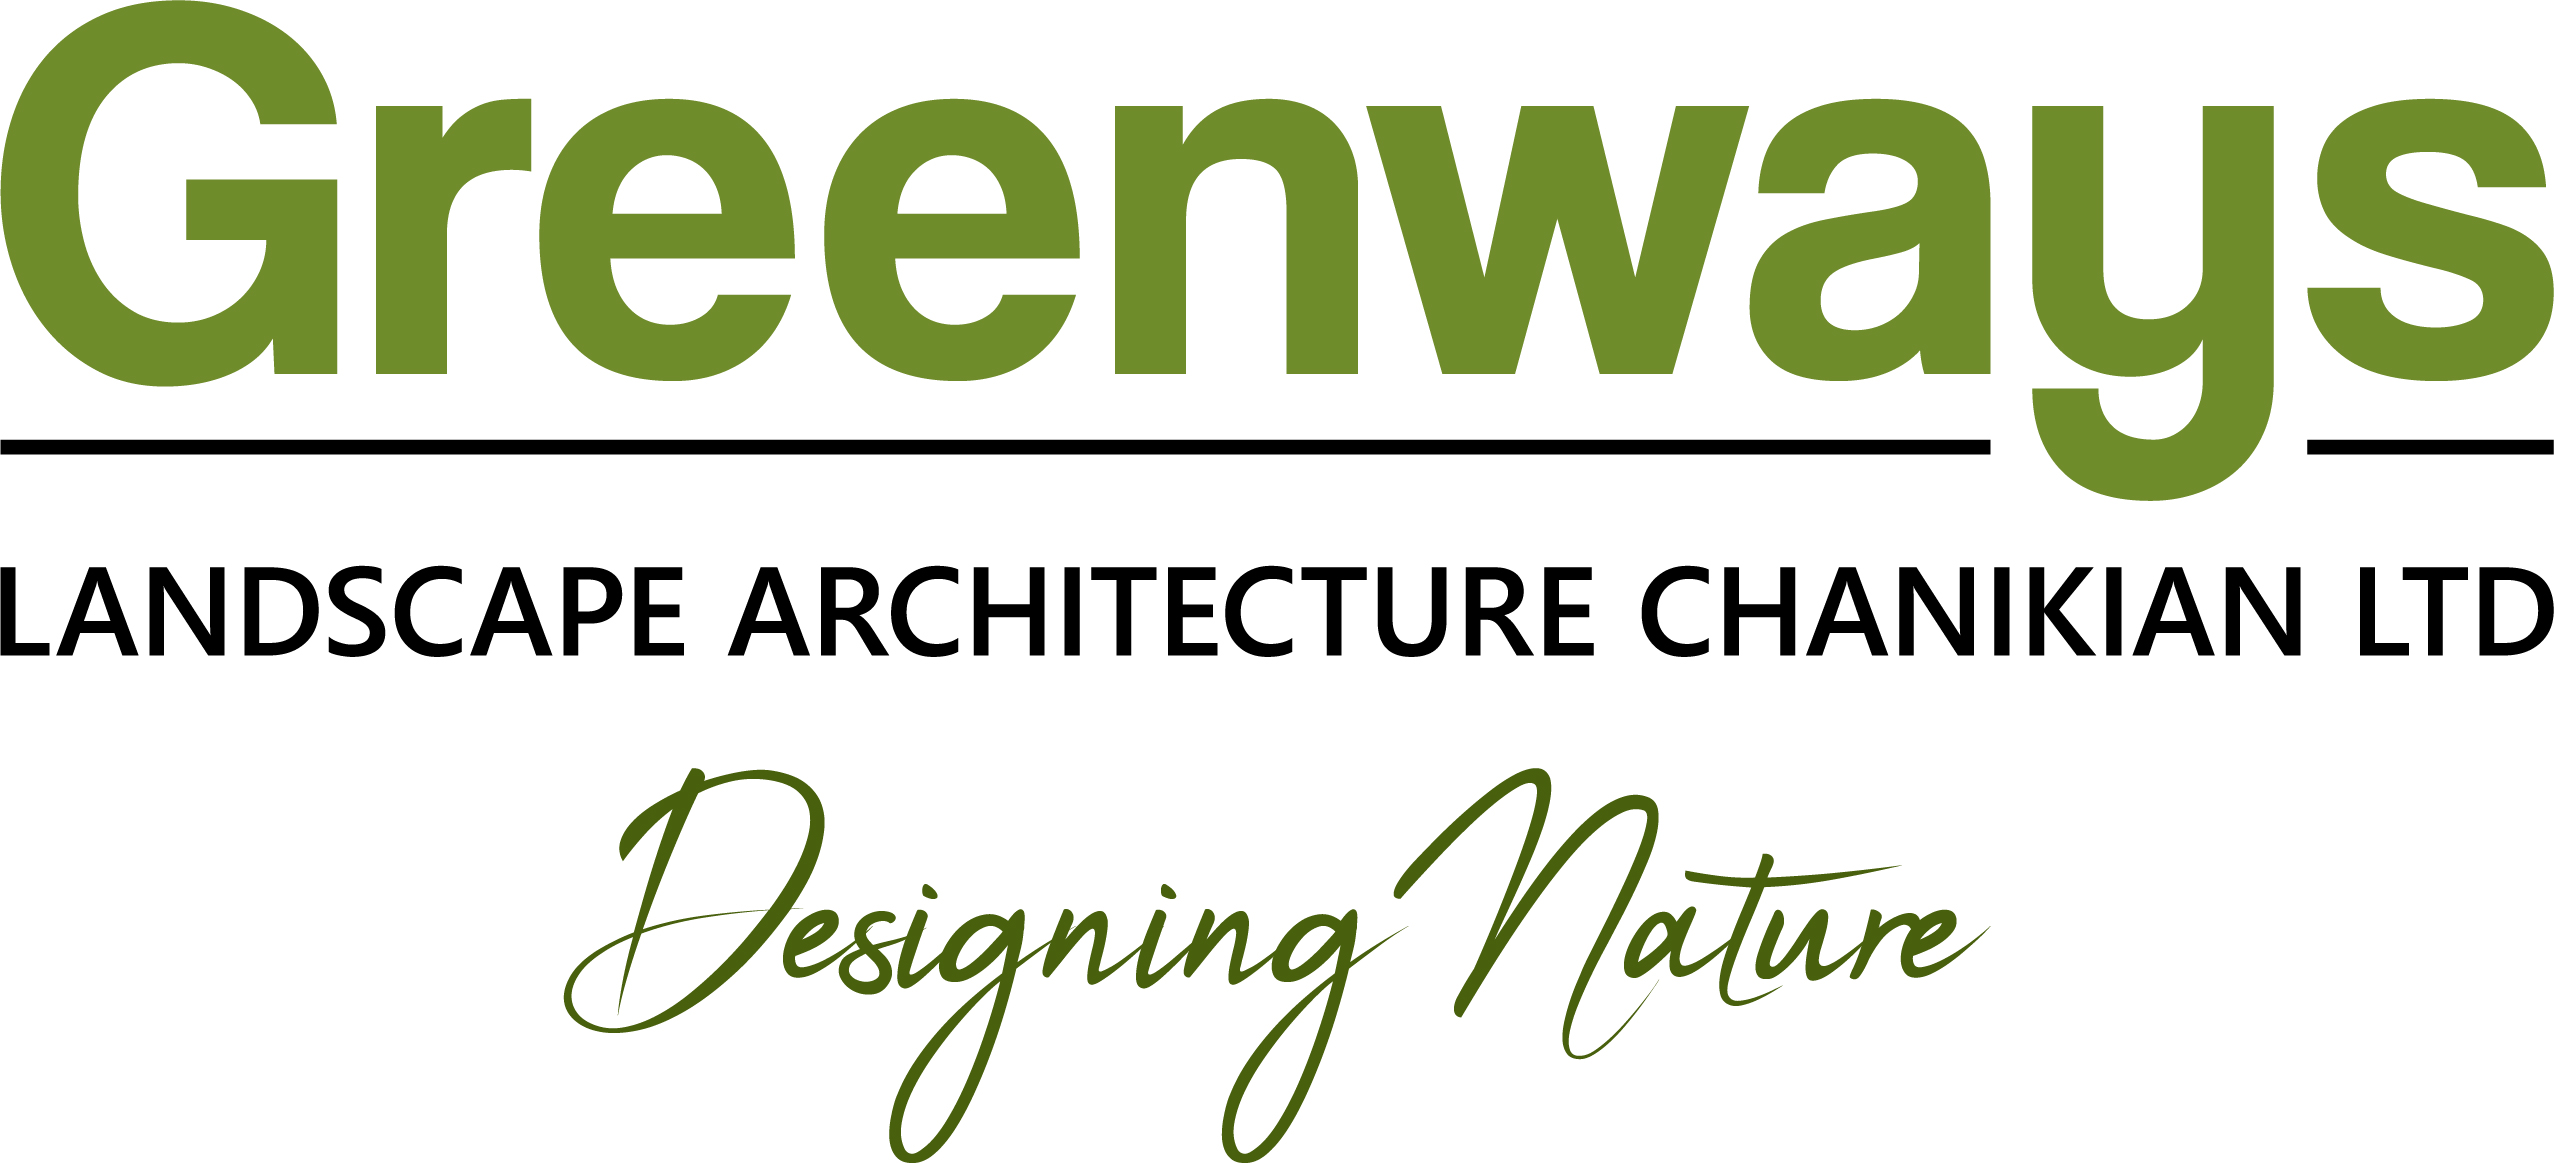 Greenways Landscape Architecture